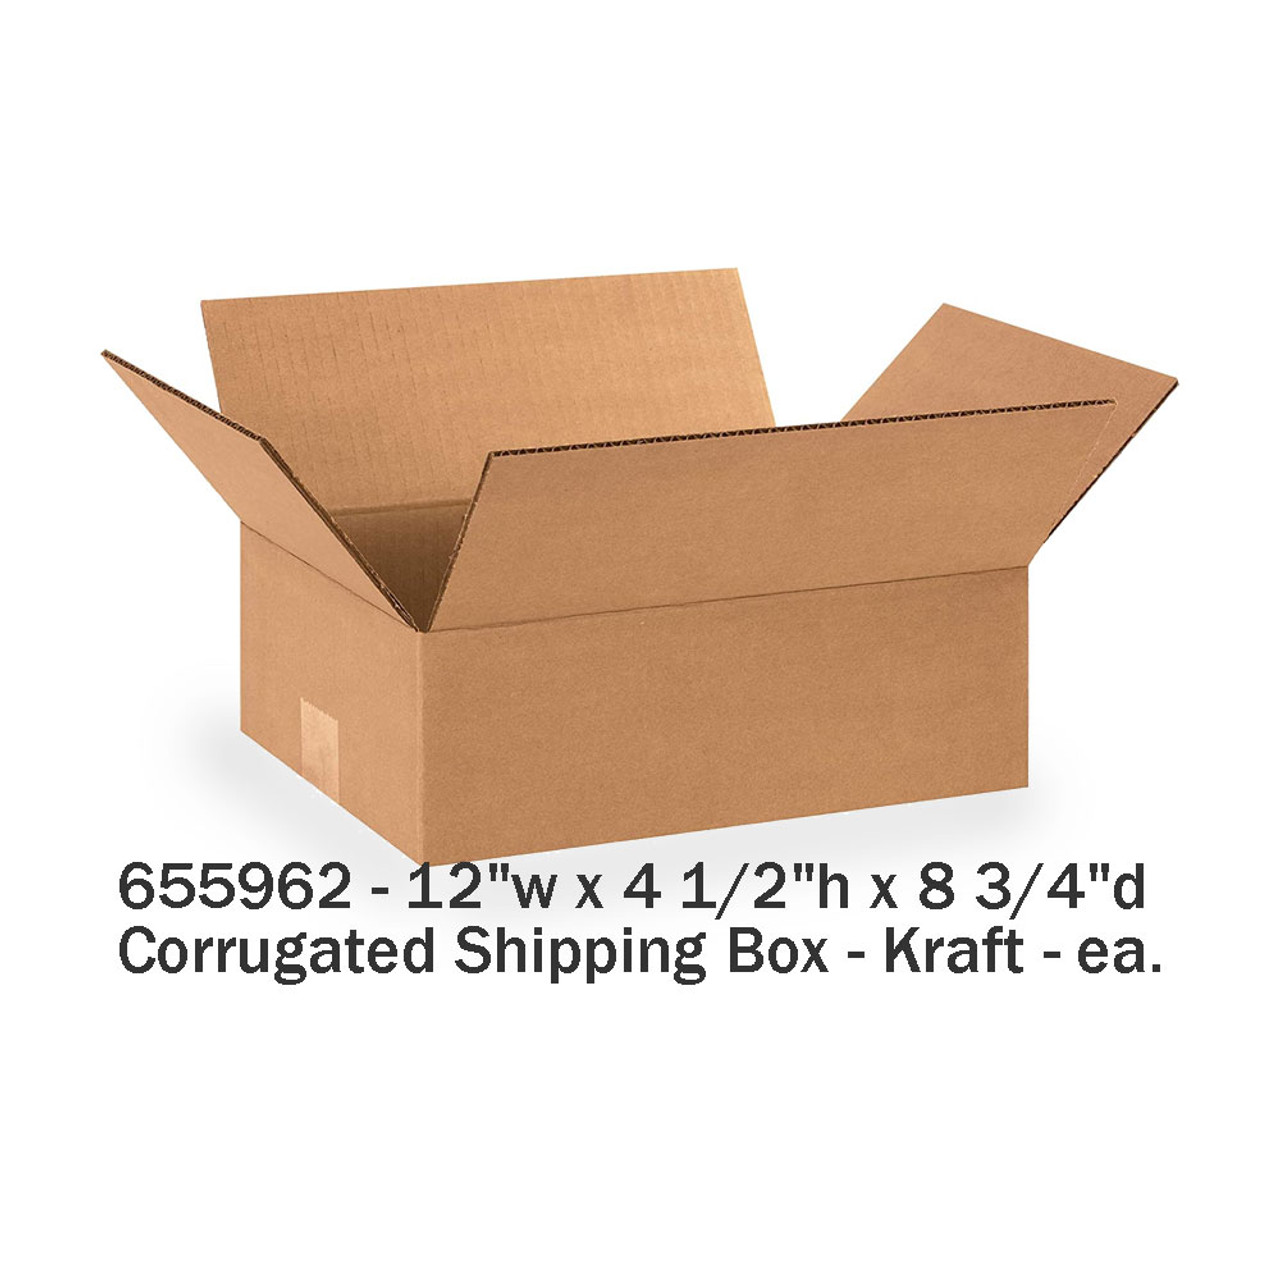 #116K - 12"w x 8 3/4"d x 4 1/2"h x  Corrugated Shipping Box - Kraft - ea.